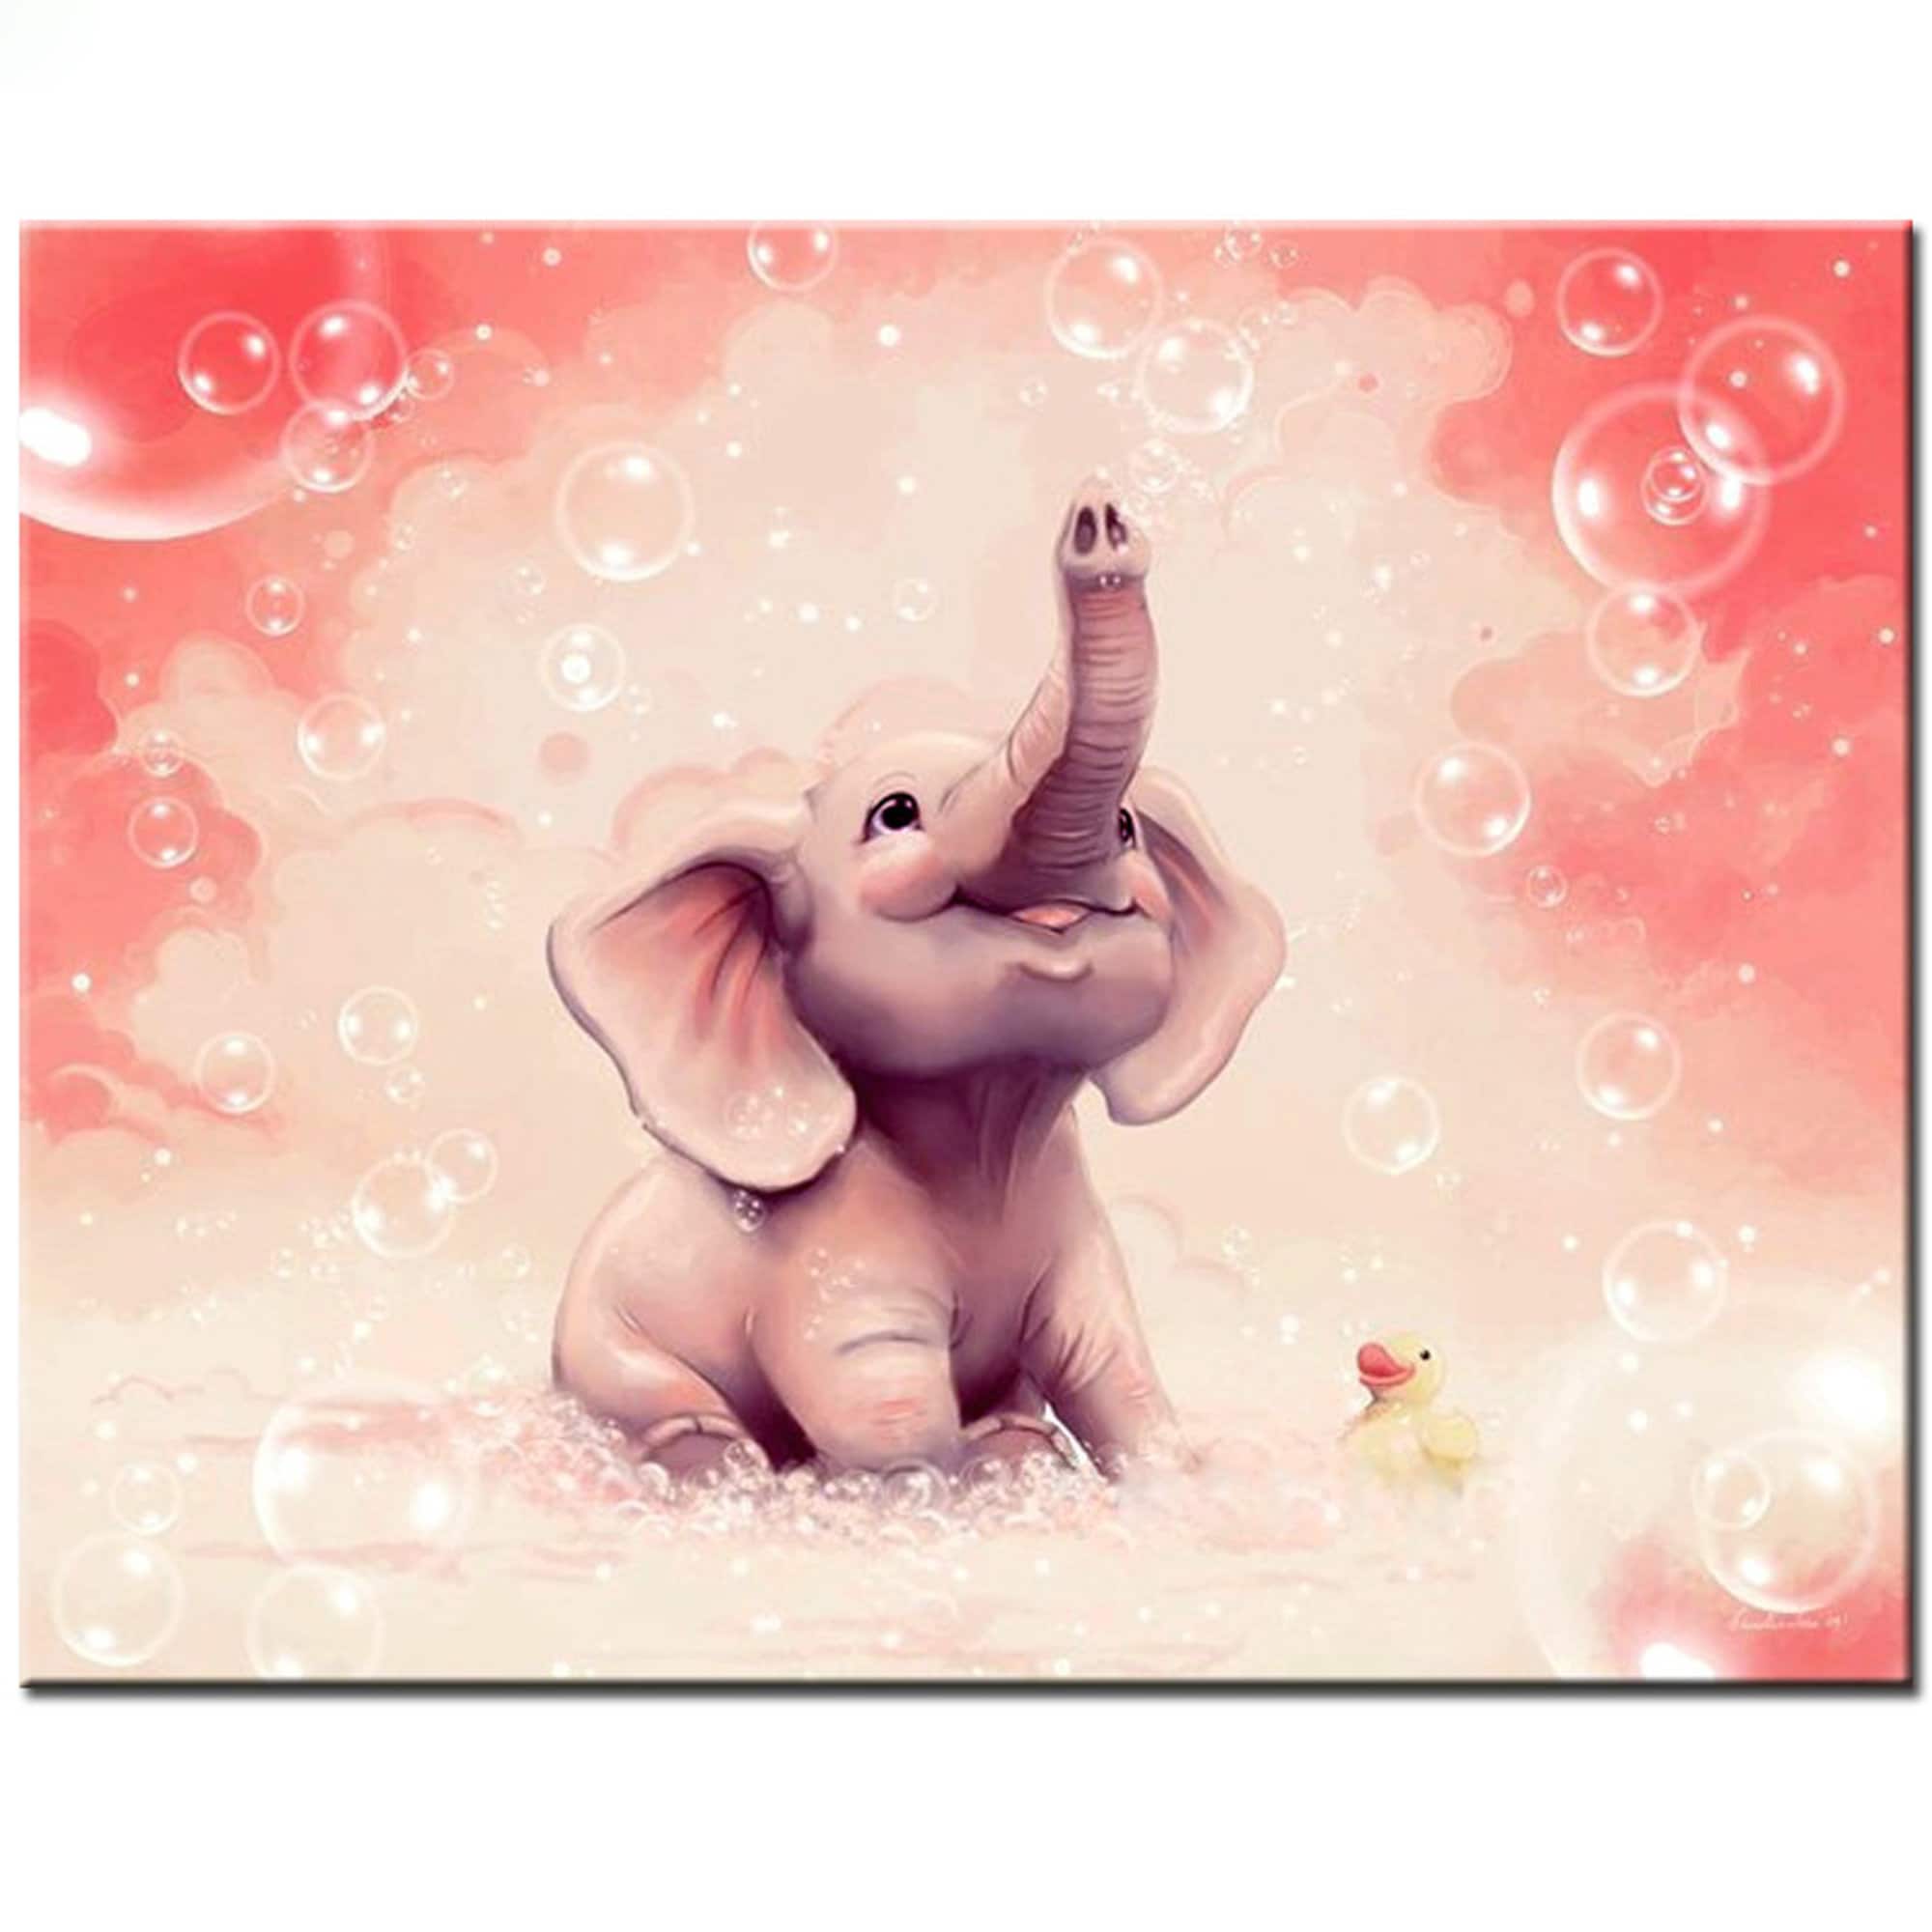  uohqhi Elephant Diamond Painting Kits for Adults,Diamond  Painting Elephant,Diamond Art Kits Elephant,Elephant Diamond Painting Gem  Art for Gift Home Wall Decor(12x16 inch)